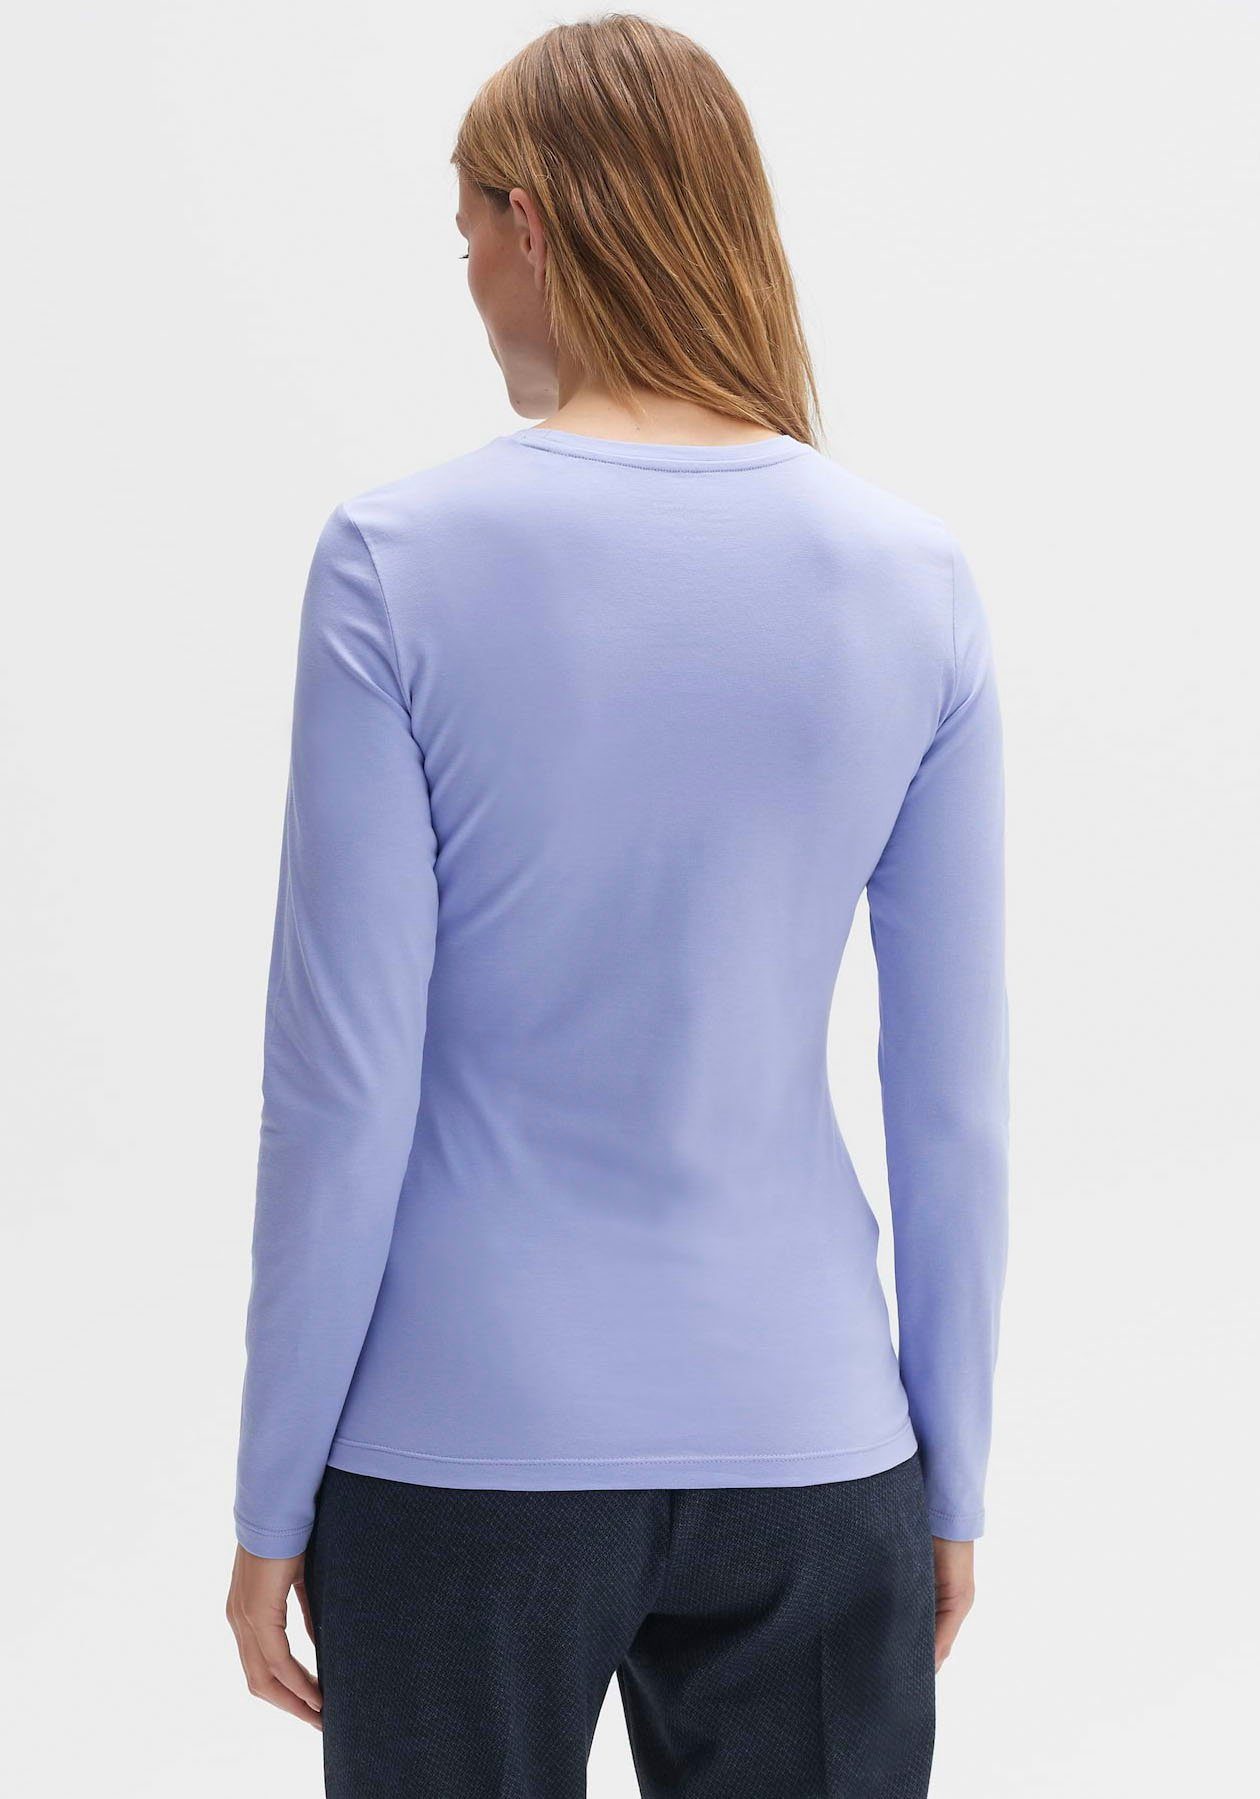 Langarmshirt in Basic-Form cleaner soft Smilla viola OPUS